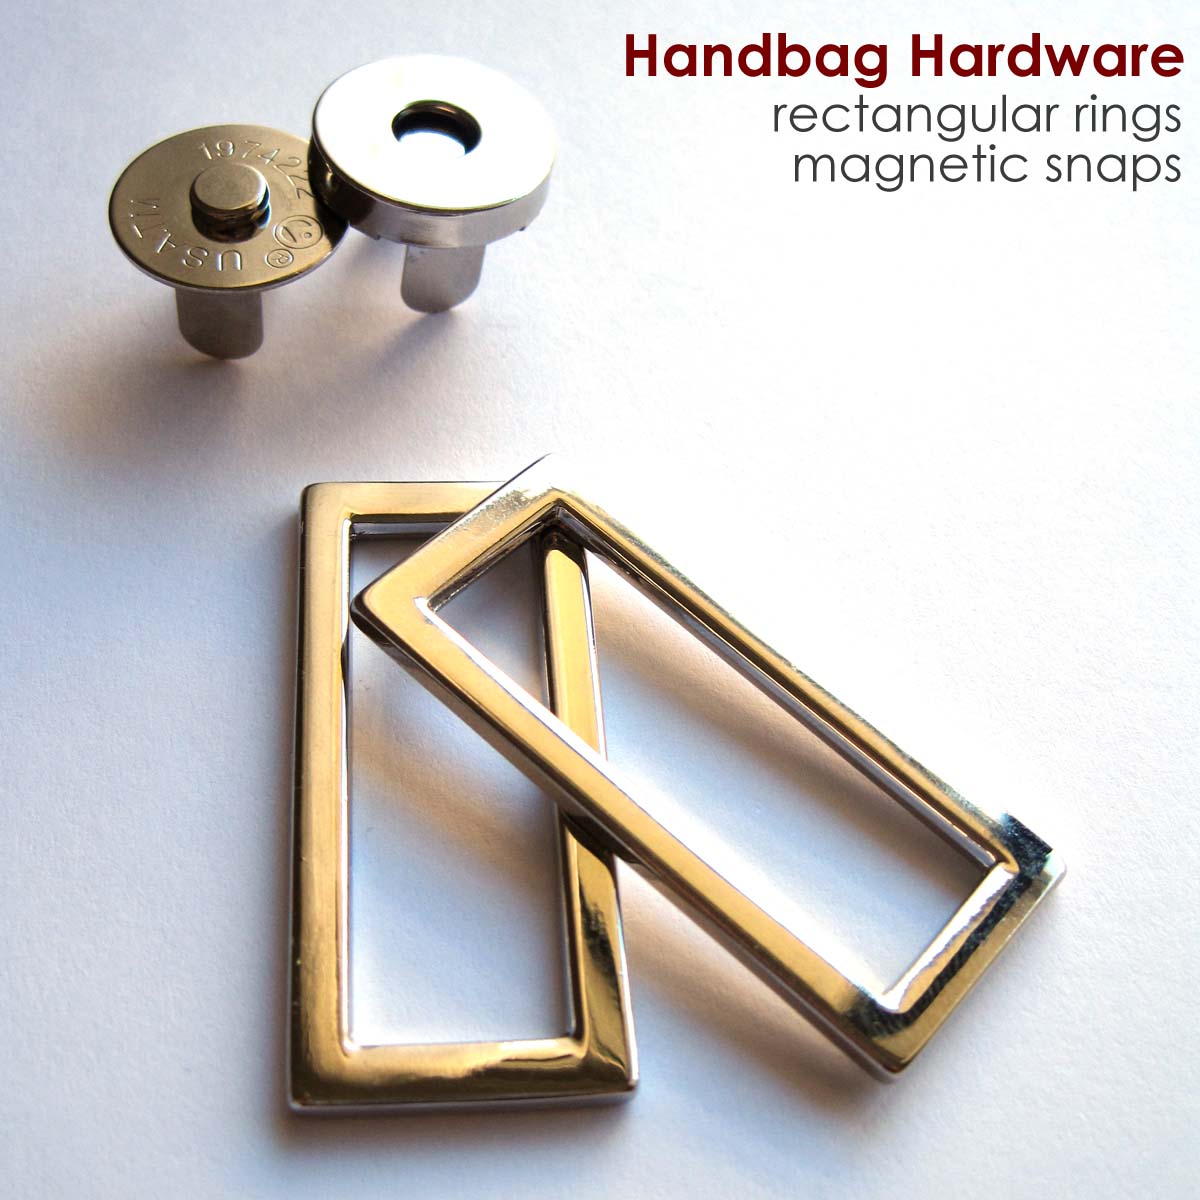 Emmaline Bags: Sewing Patterns and Purse Supplies: Handbag Hardware Kit Available!